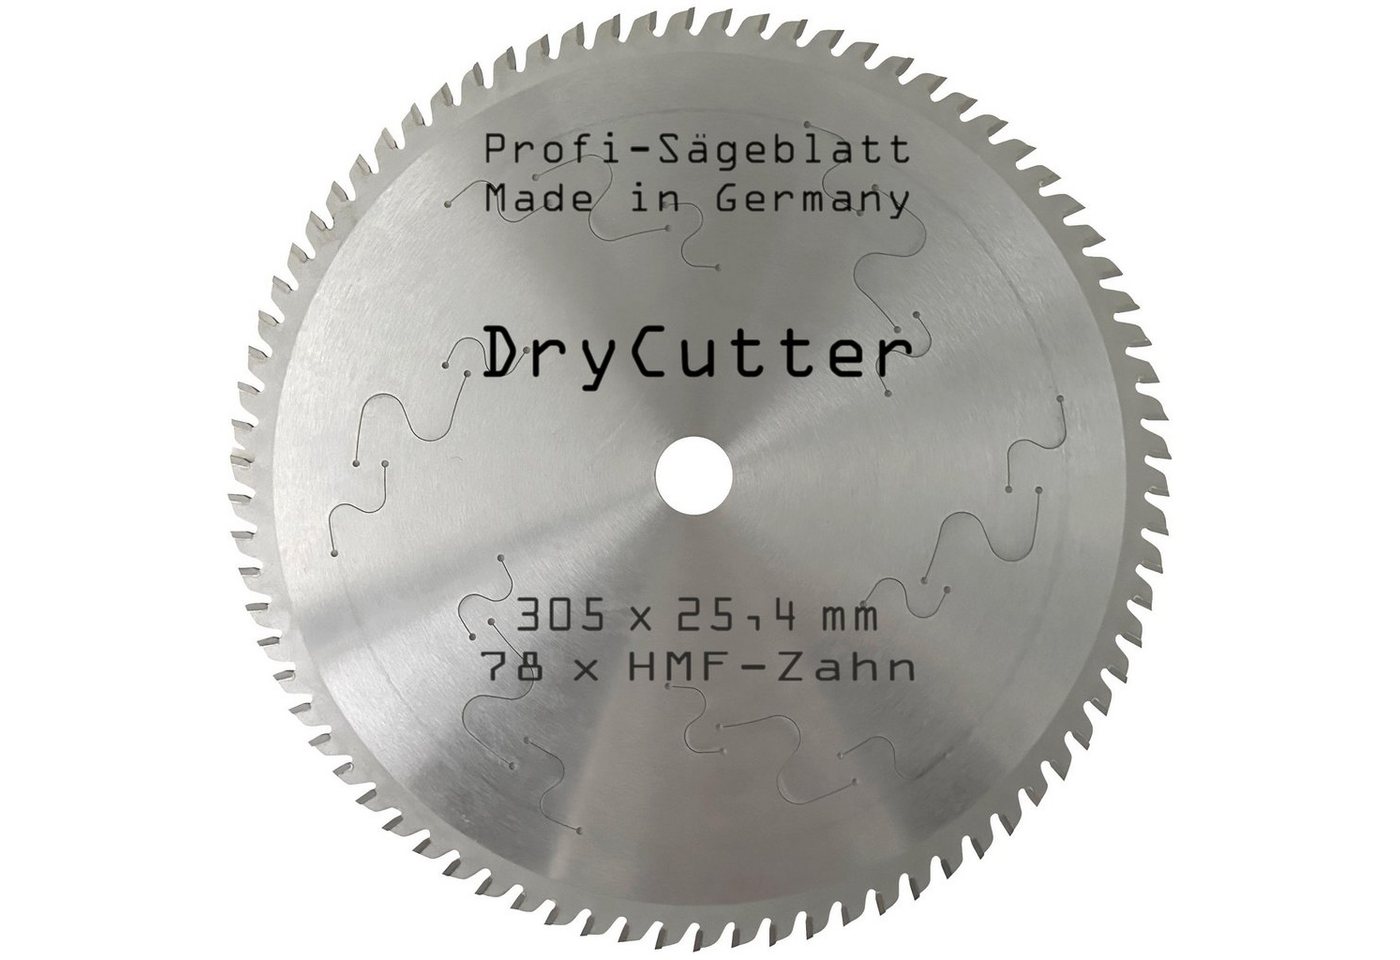 BauSupermarkt24 Kreissägeblatt Sägeblatt Dry-Cutter 305 x 25,4 mm für Kreissäge Alu Kunstoff Stahl von BauSupermarkt24